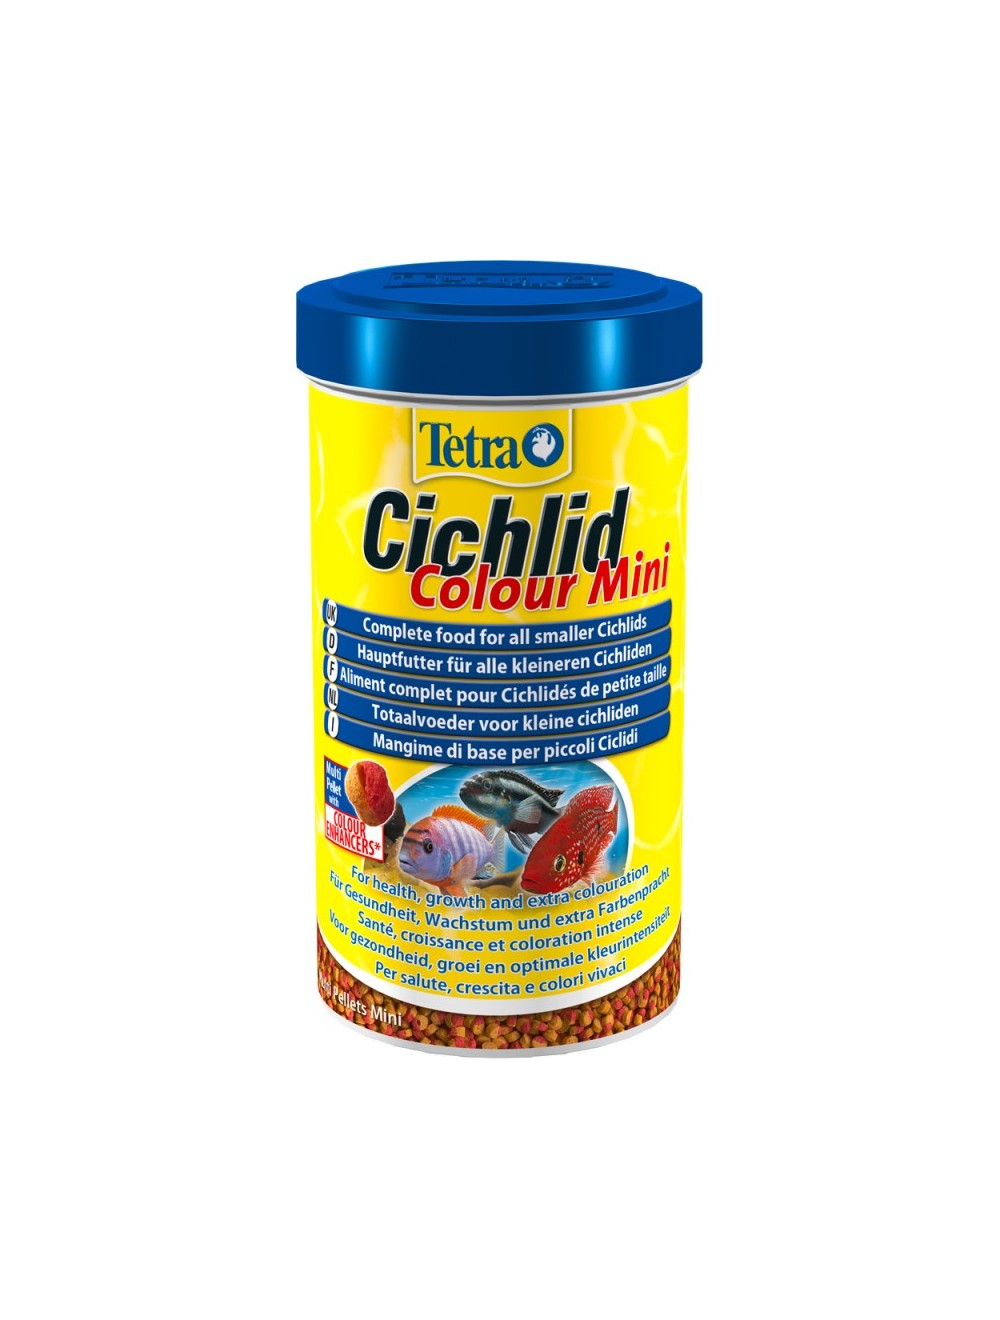 Tetra Cichlid Colour Mini Pellet 170g - Tropical Supplies North East